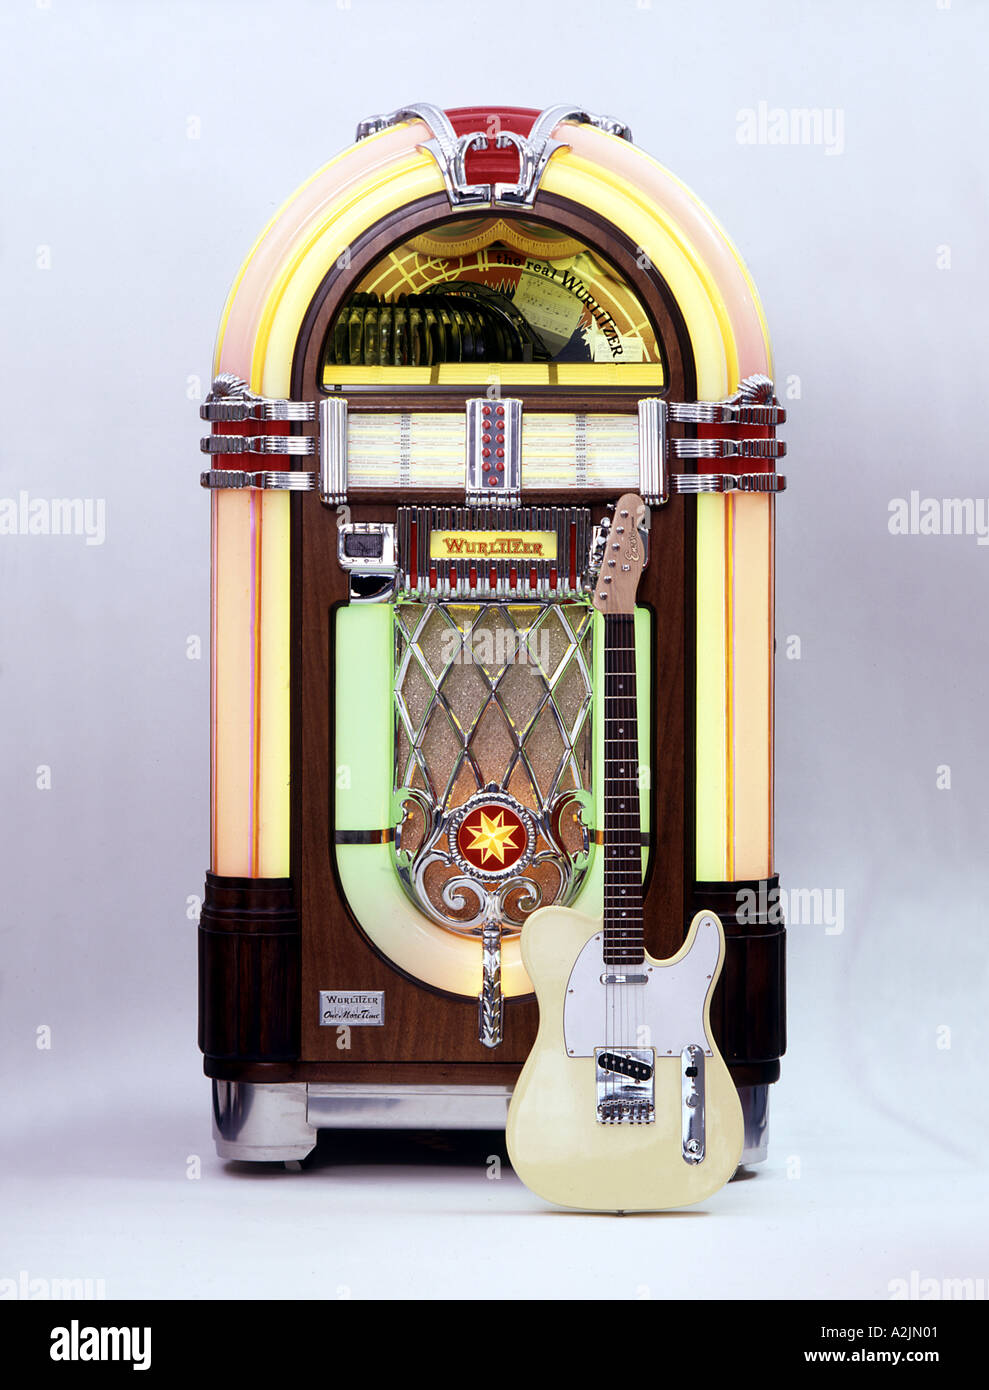 Wurlitzer jukebox music records hi-res stock images - Alamy